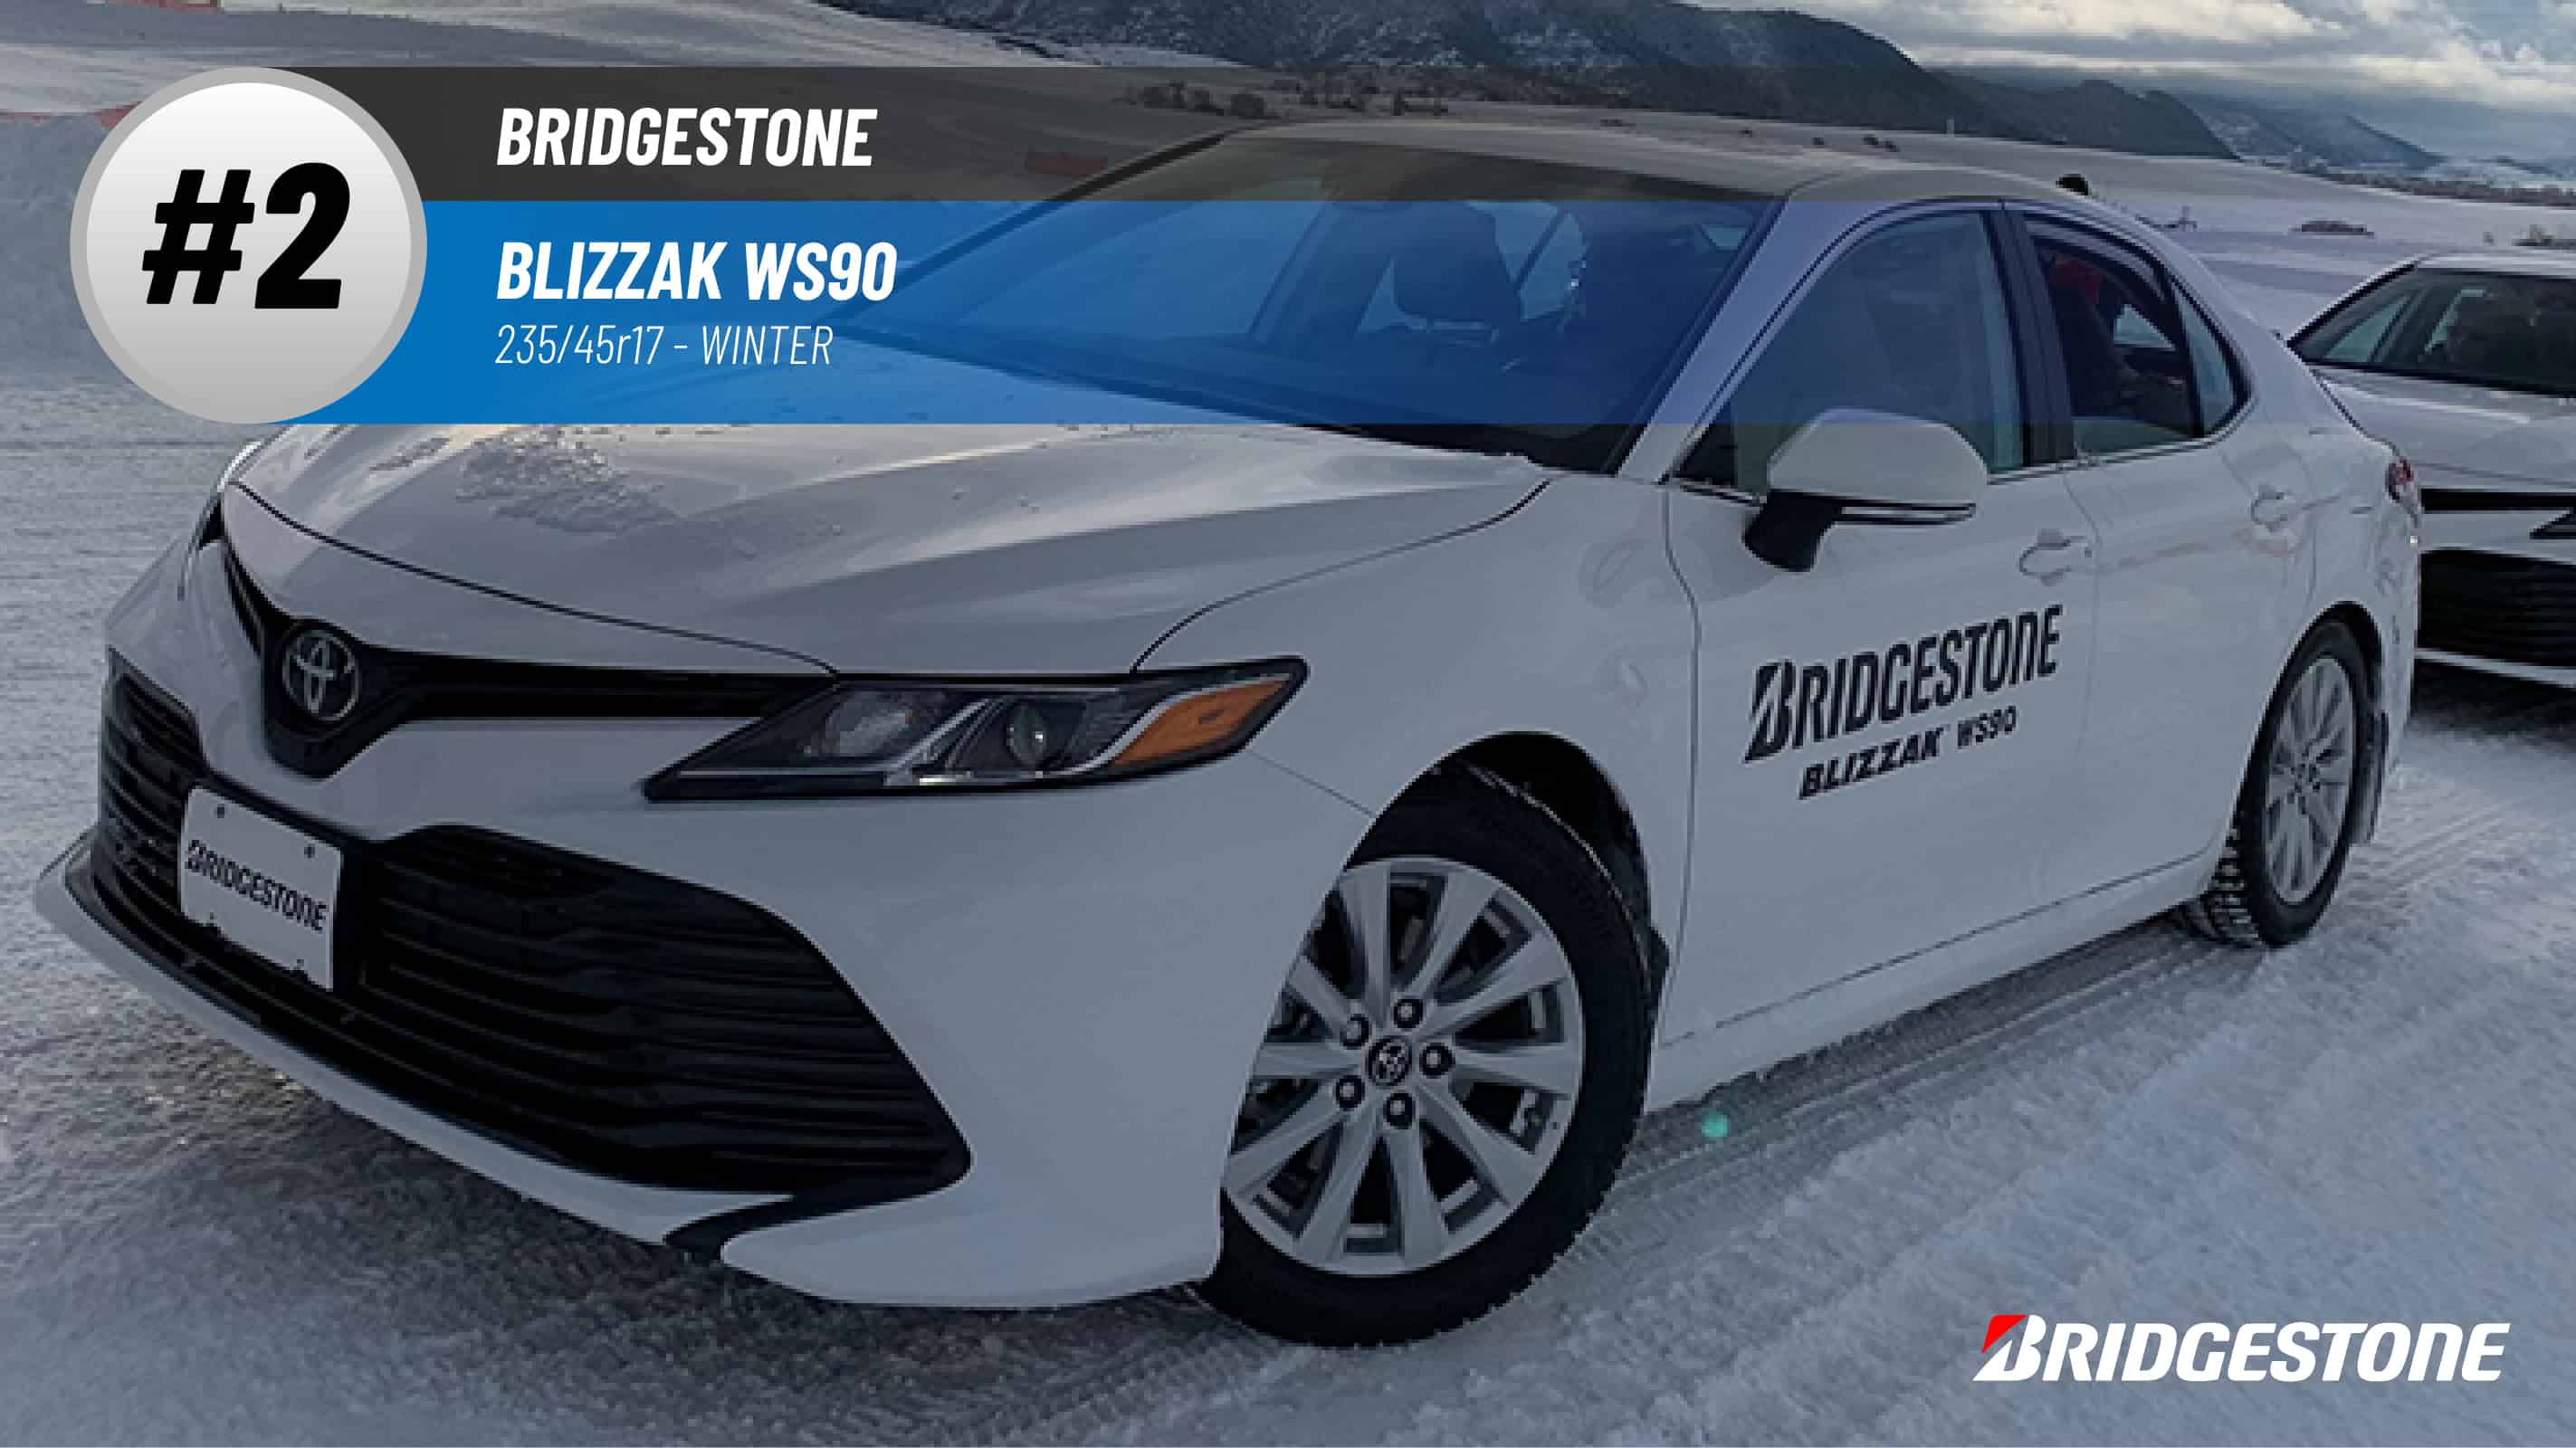 Top #2 Winter Tires: Bridgestone Blizzak WS90 – 235/45r17